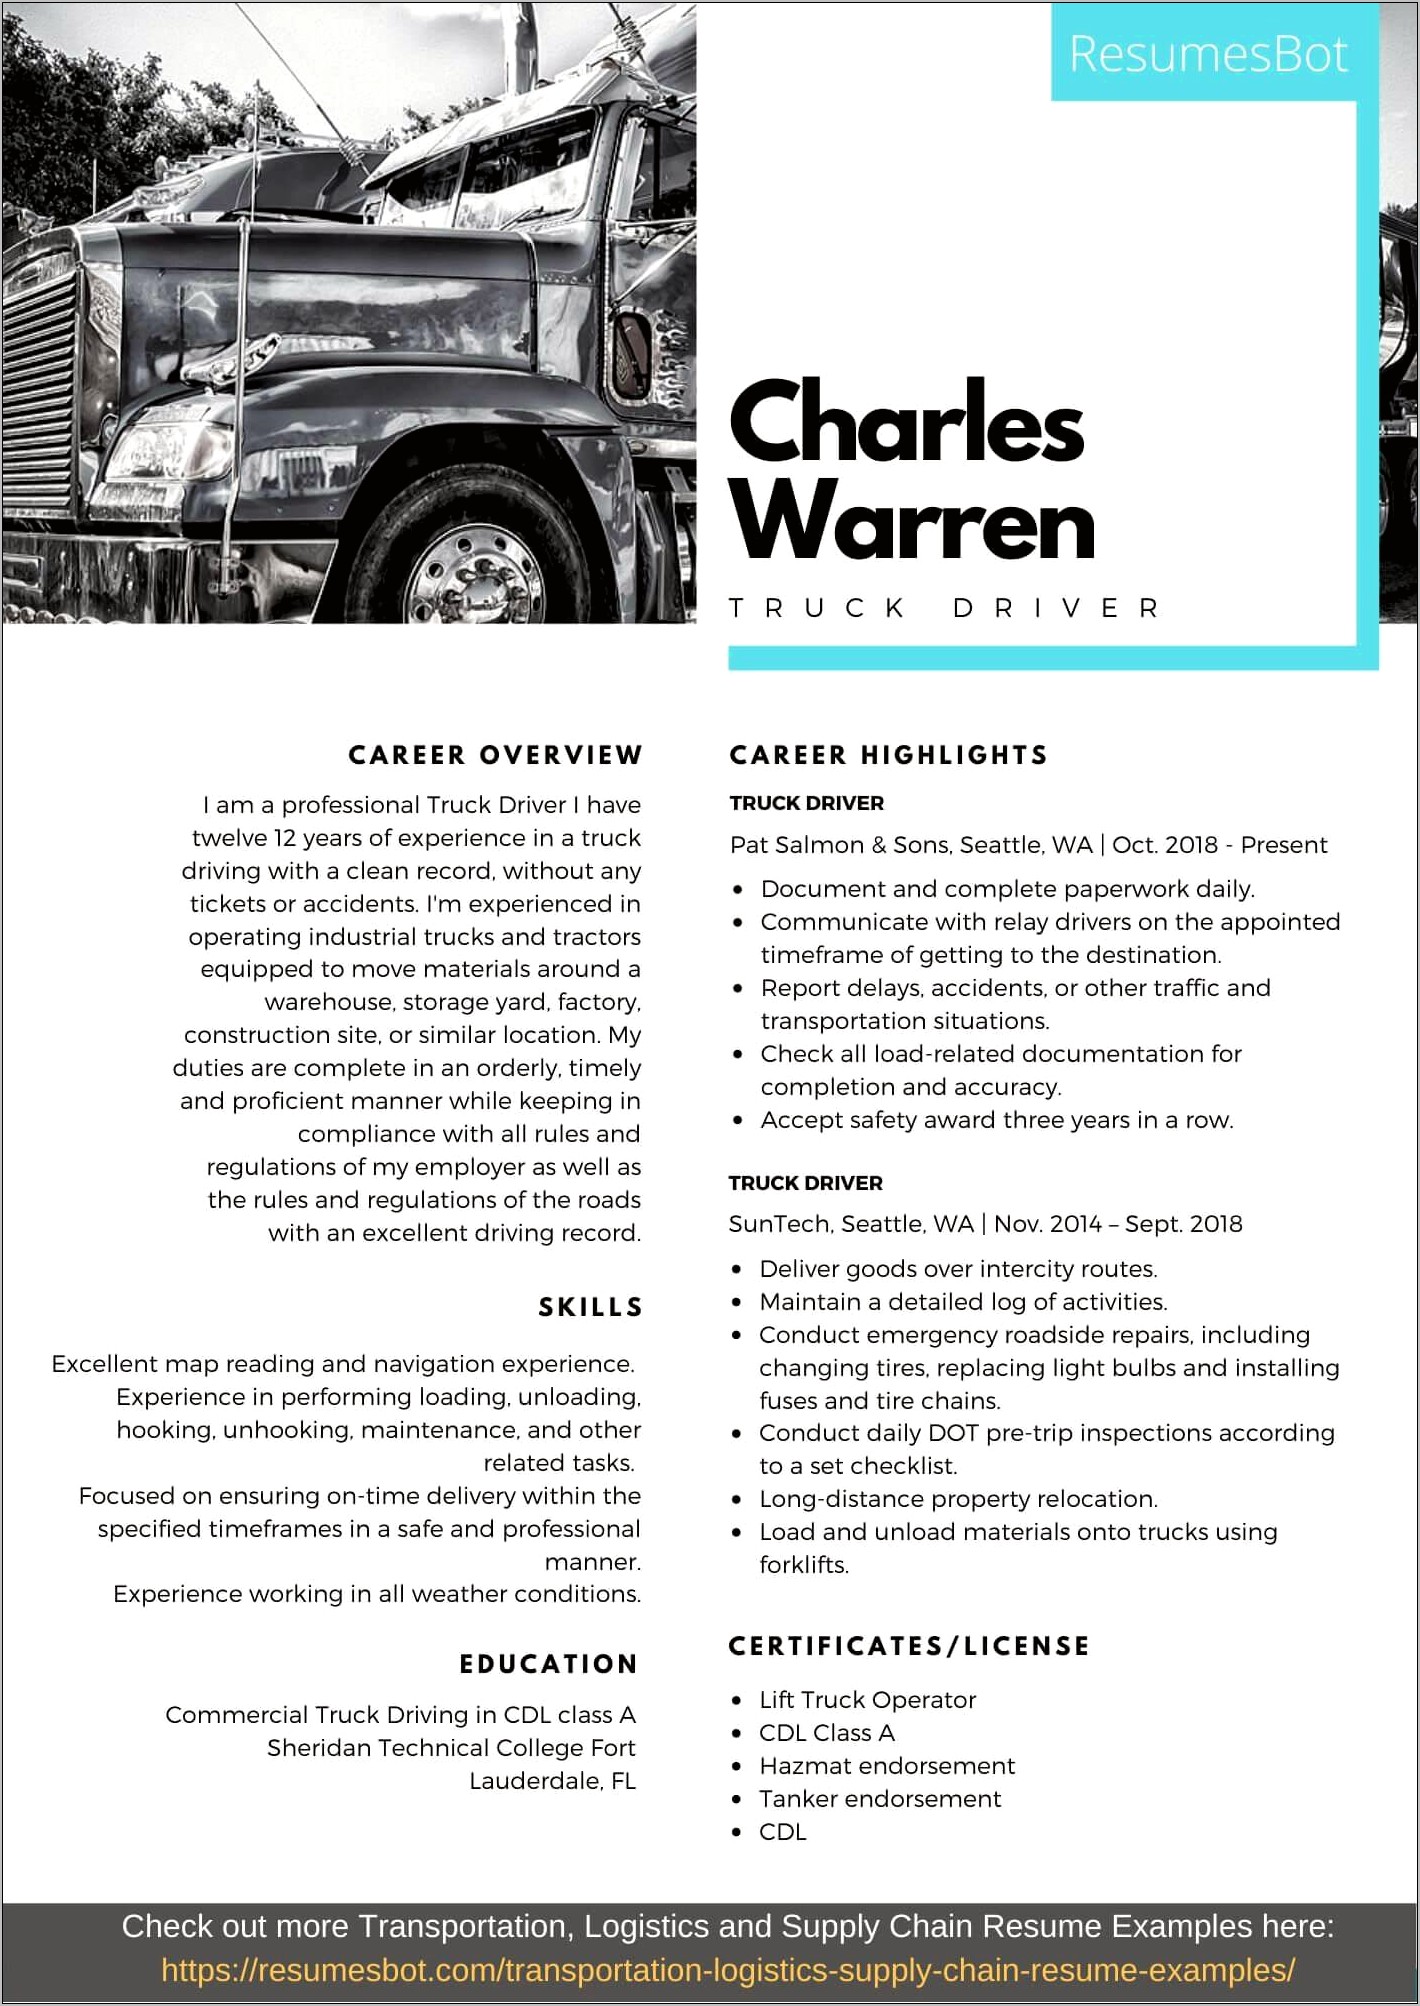 Resume Skills For Truck Driver